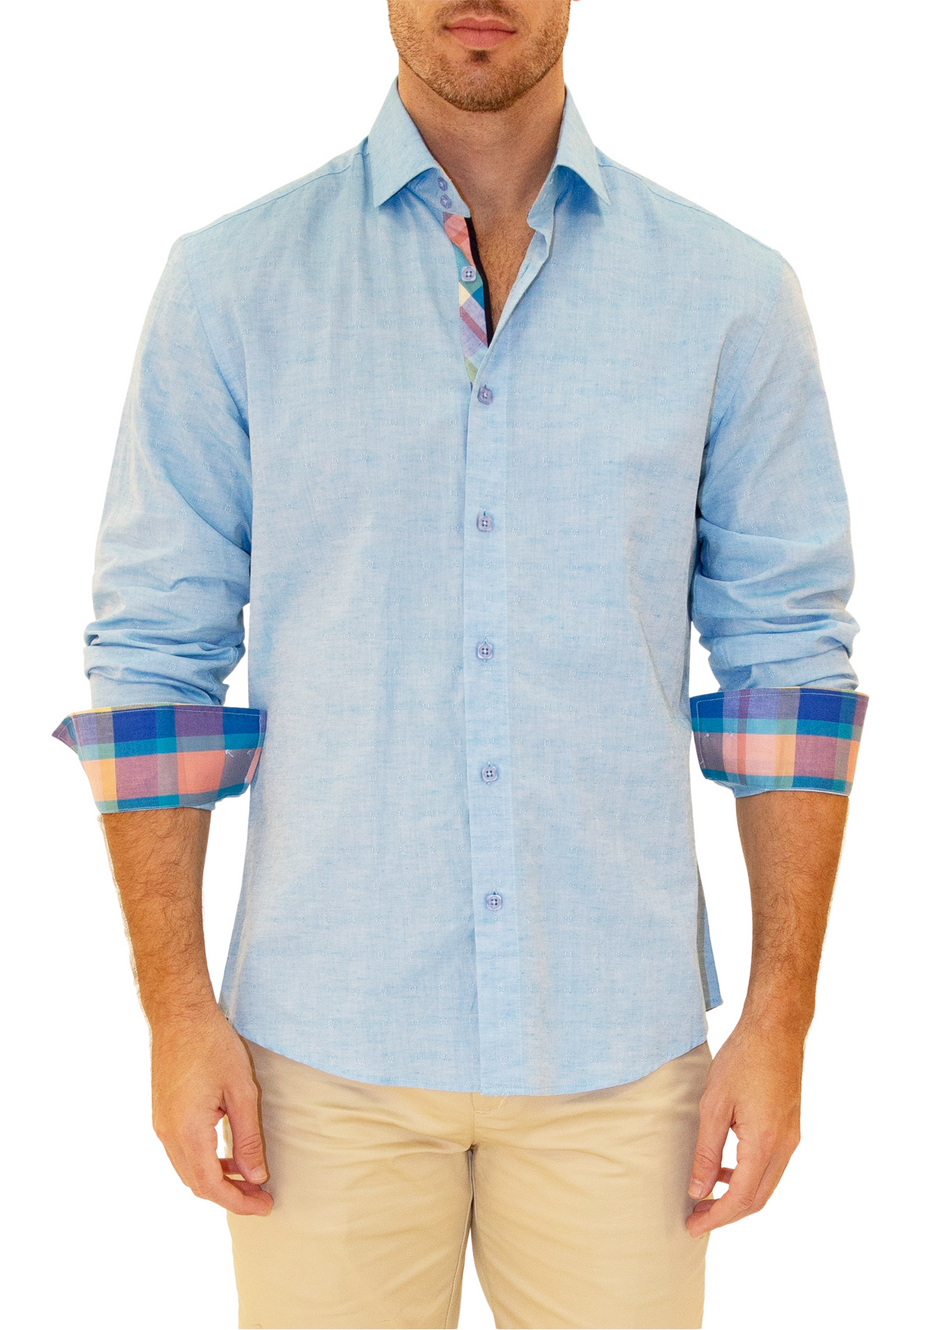 Linen Textured Madras Plaid Contrast Cuff Long Sleeve Dress Shirt Turquoise